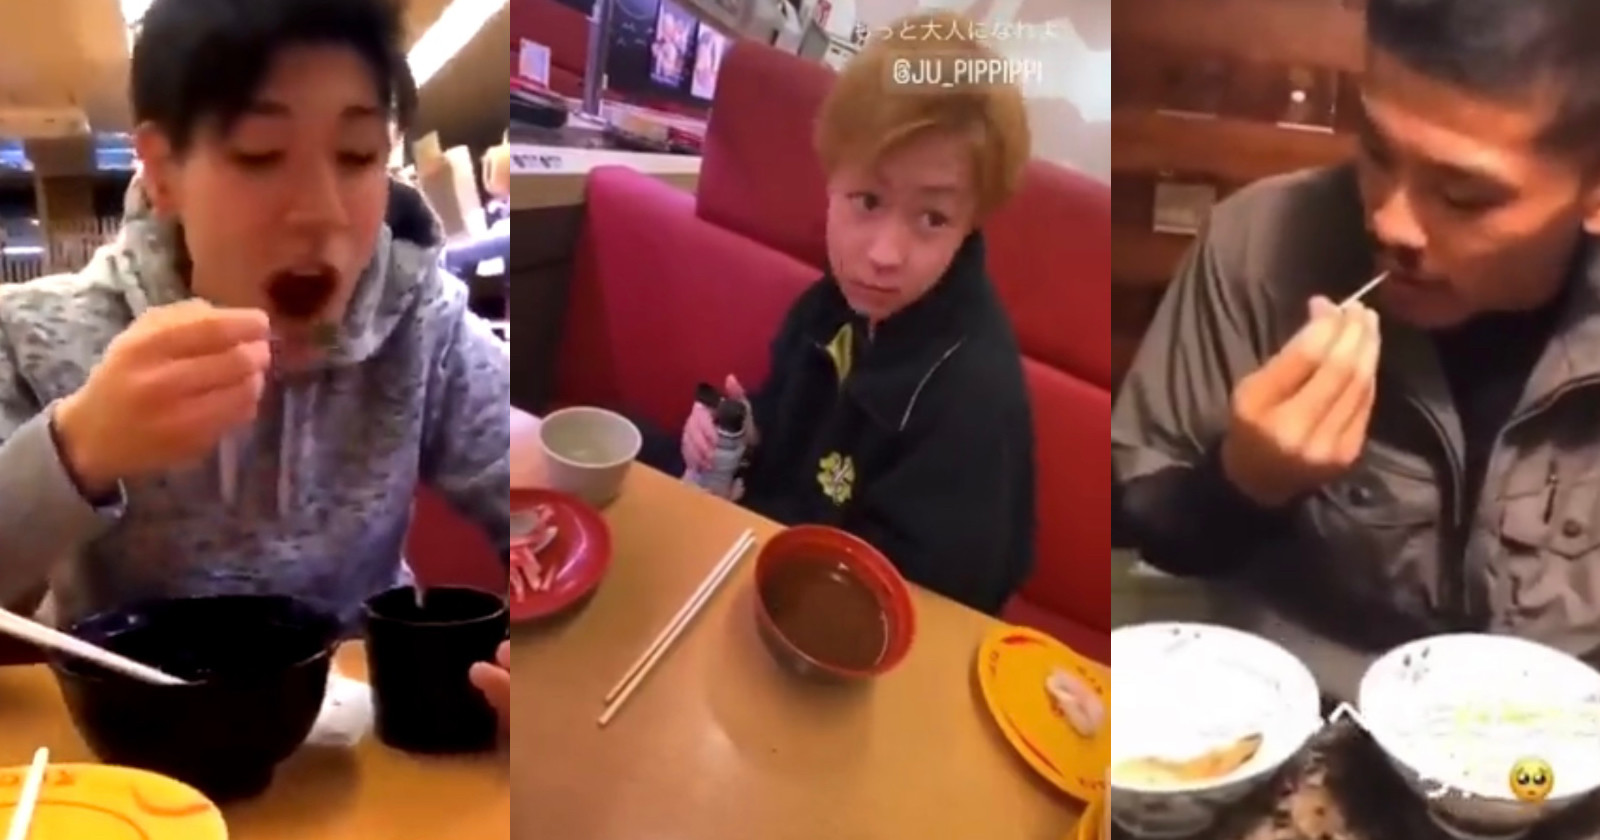  japanese restaurants use cameras fight sushi terrorism 